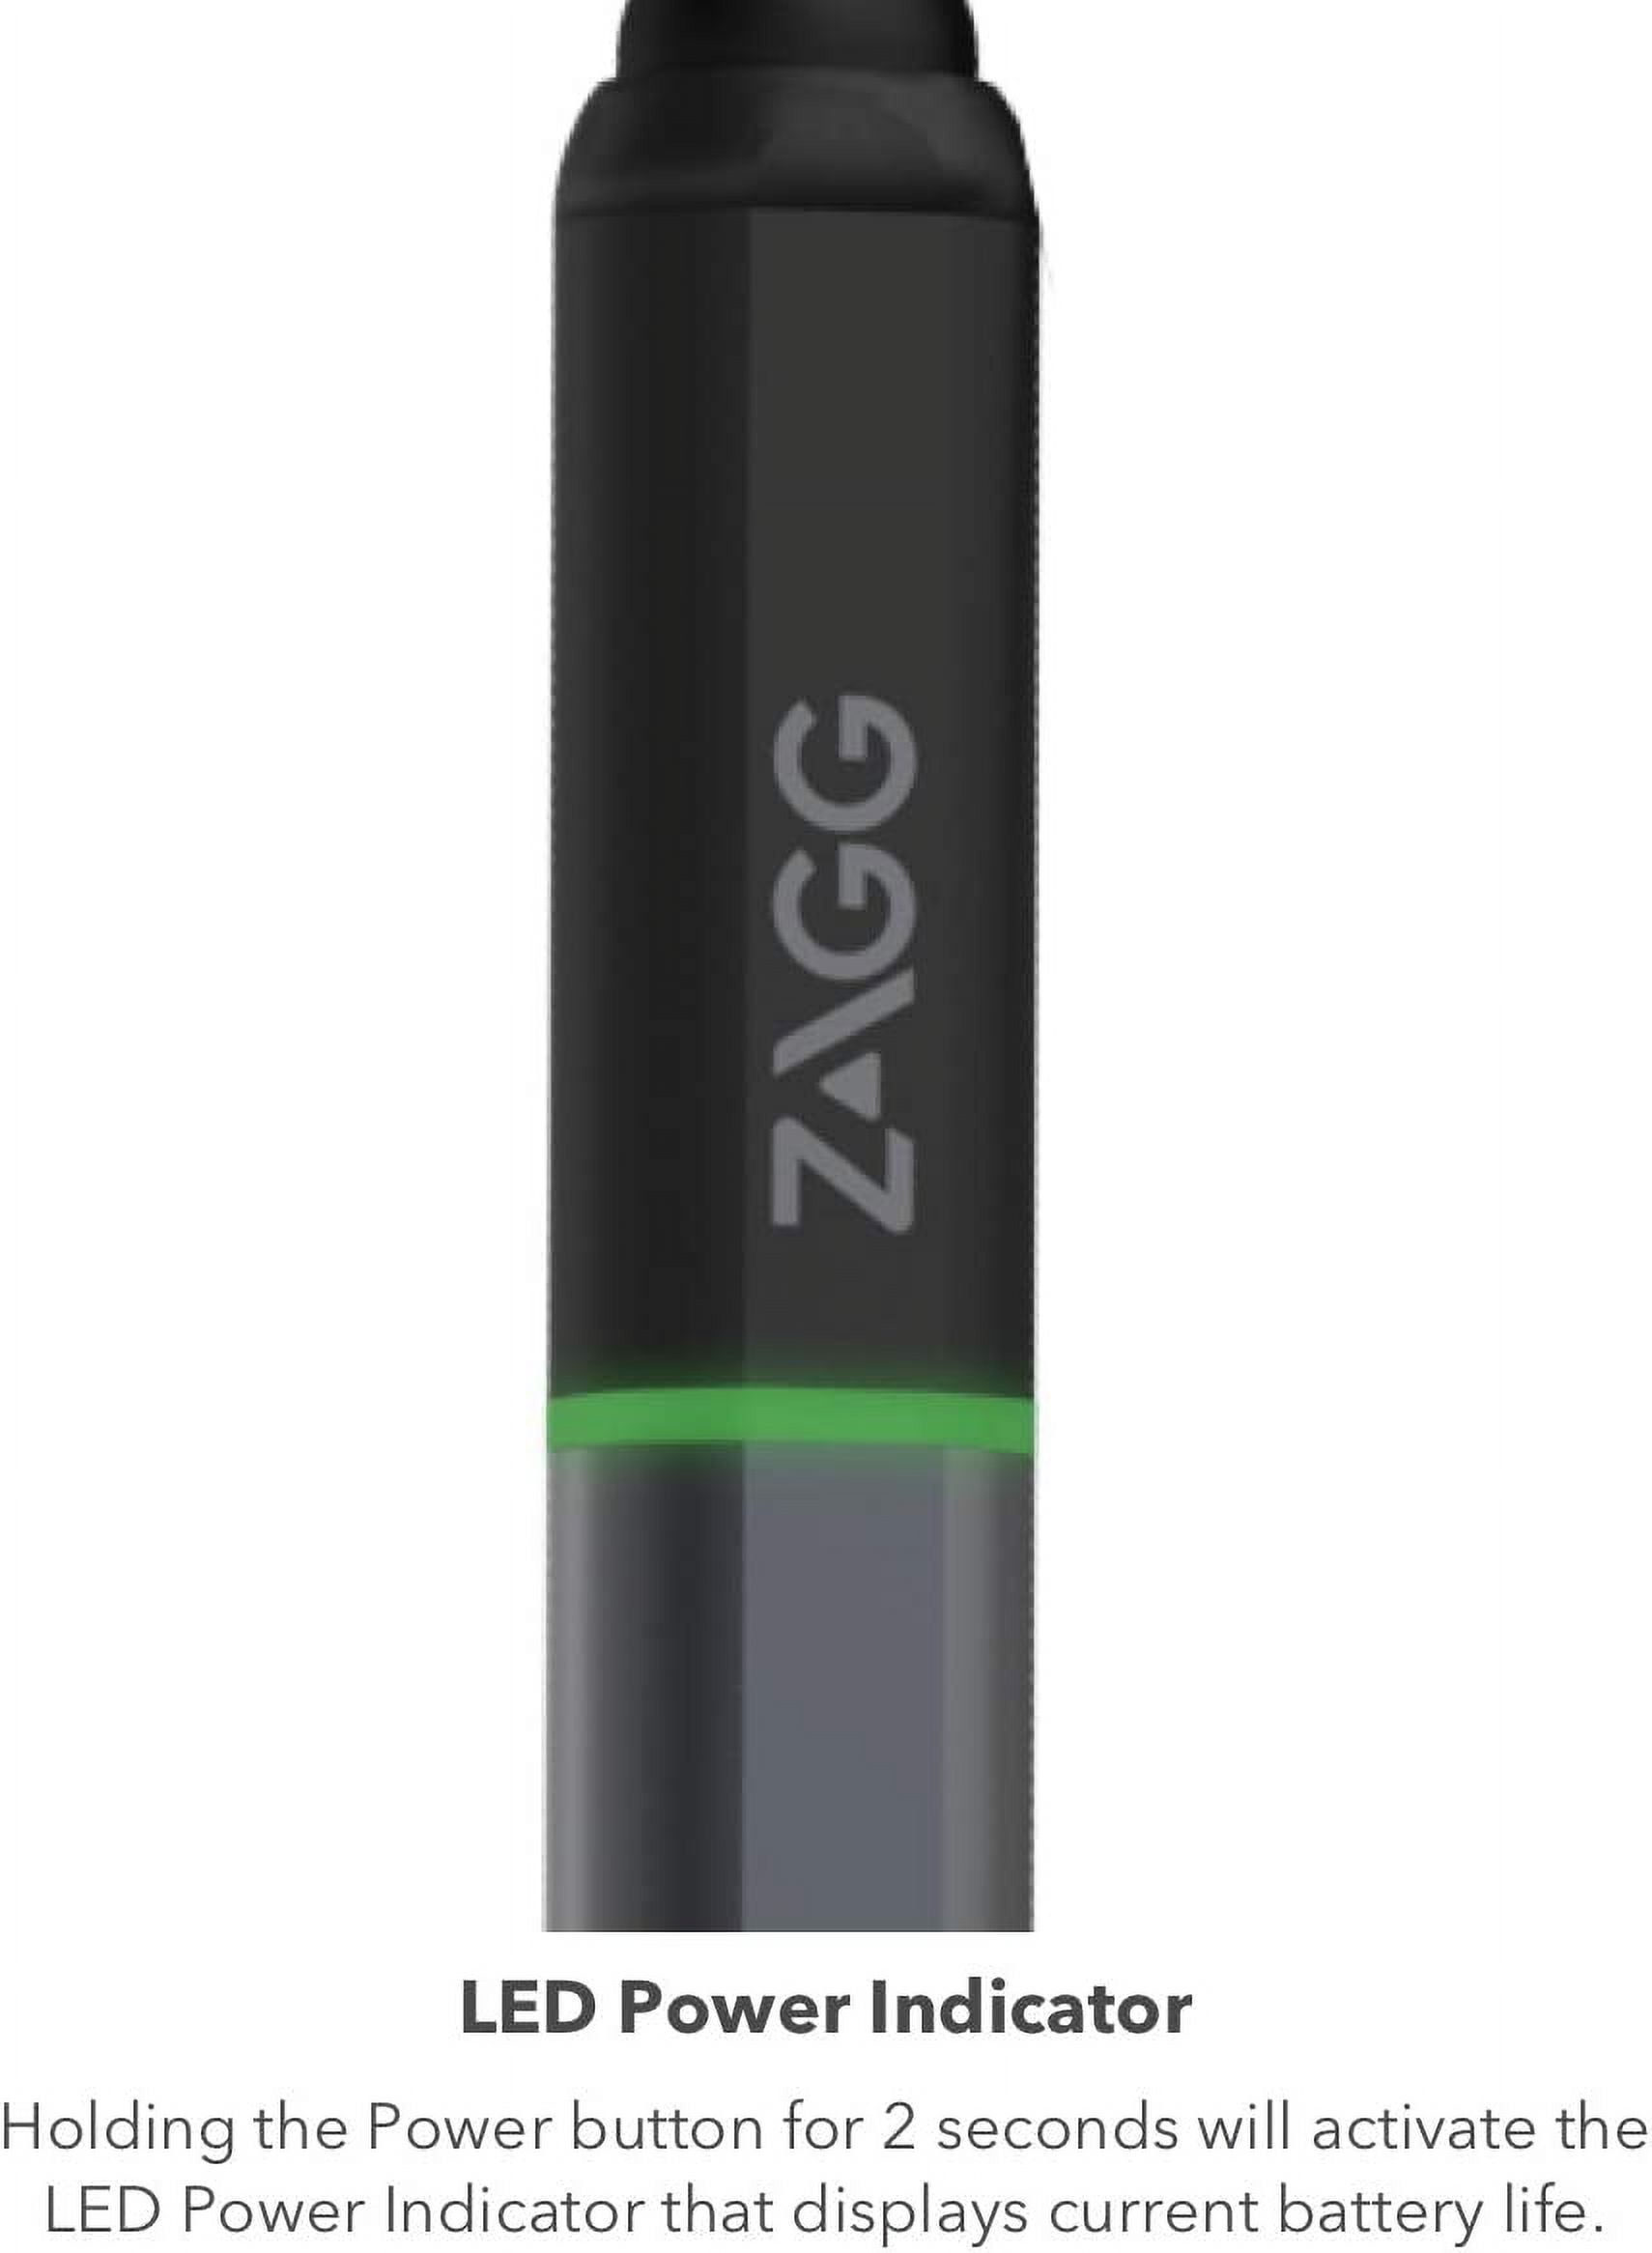 ZAGG Pro - active stylus - black